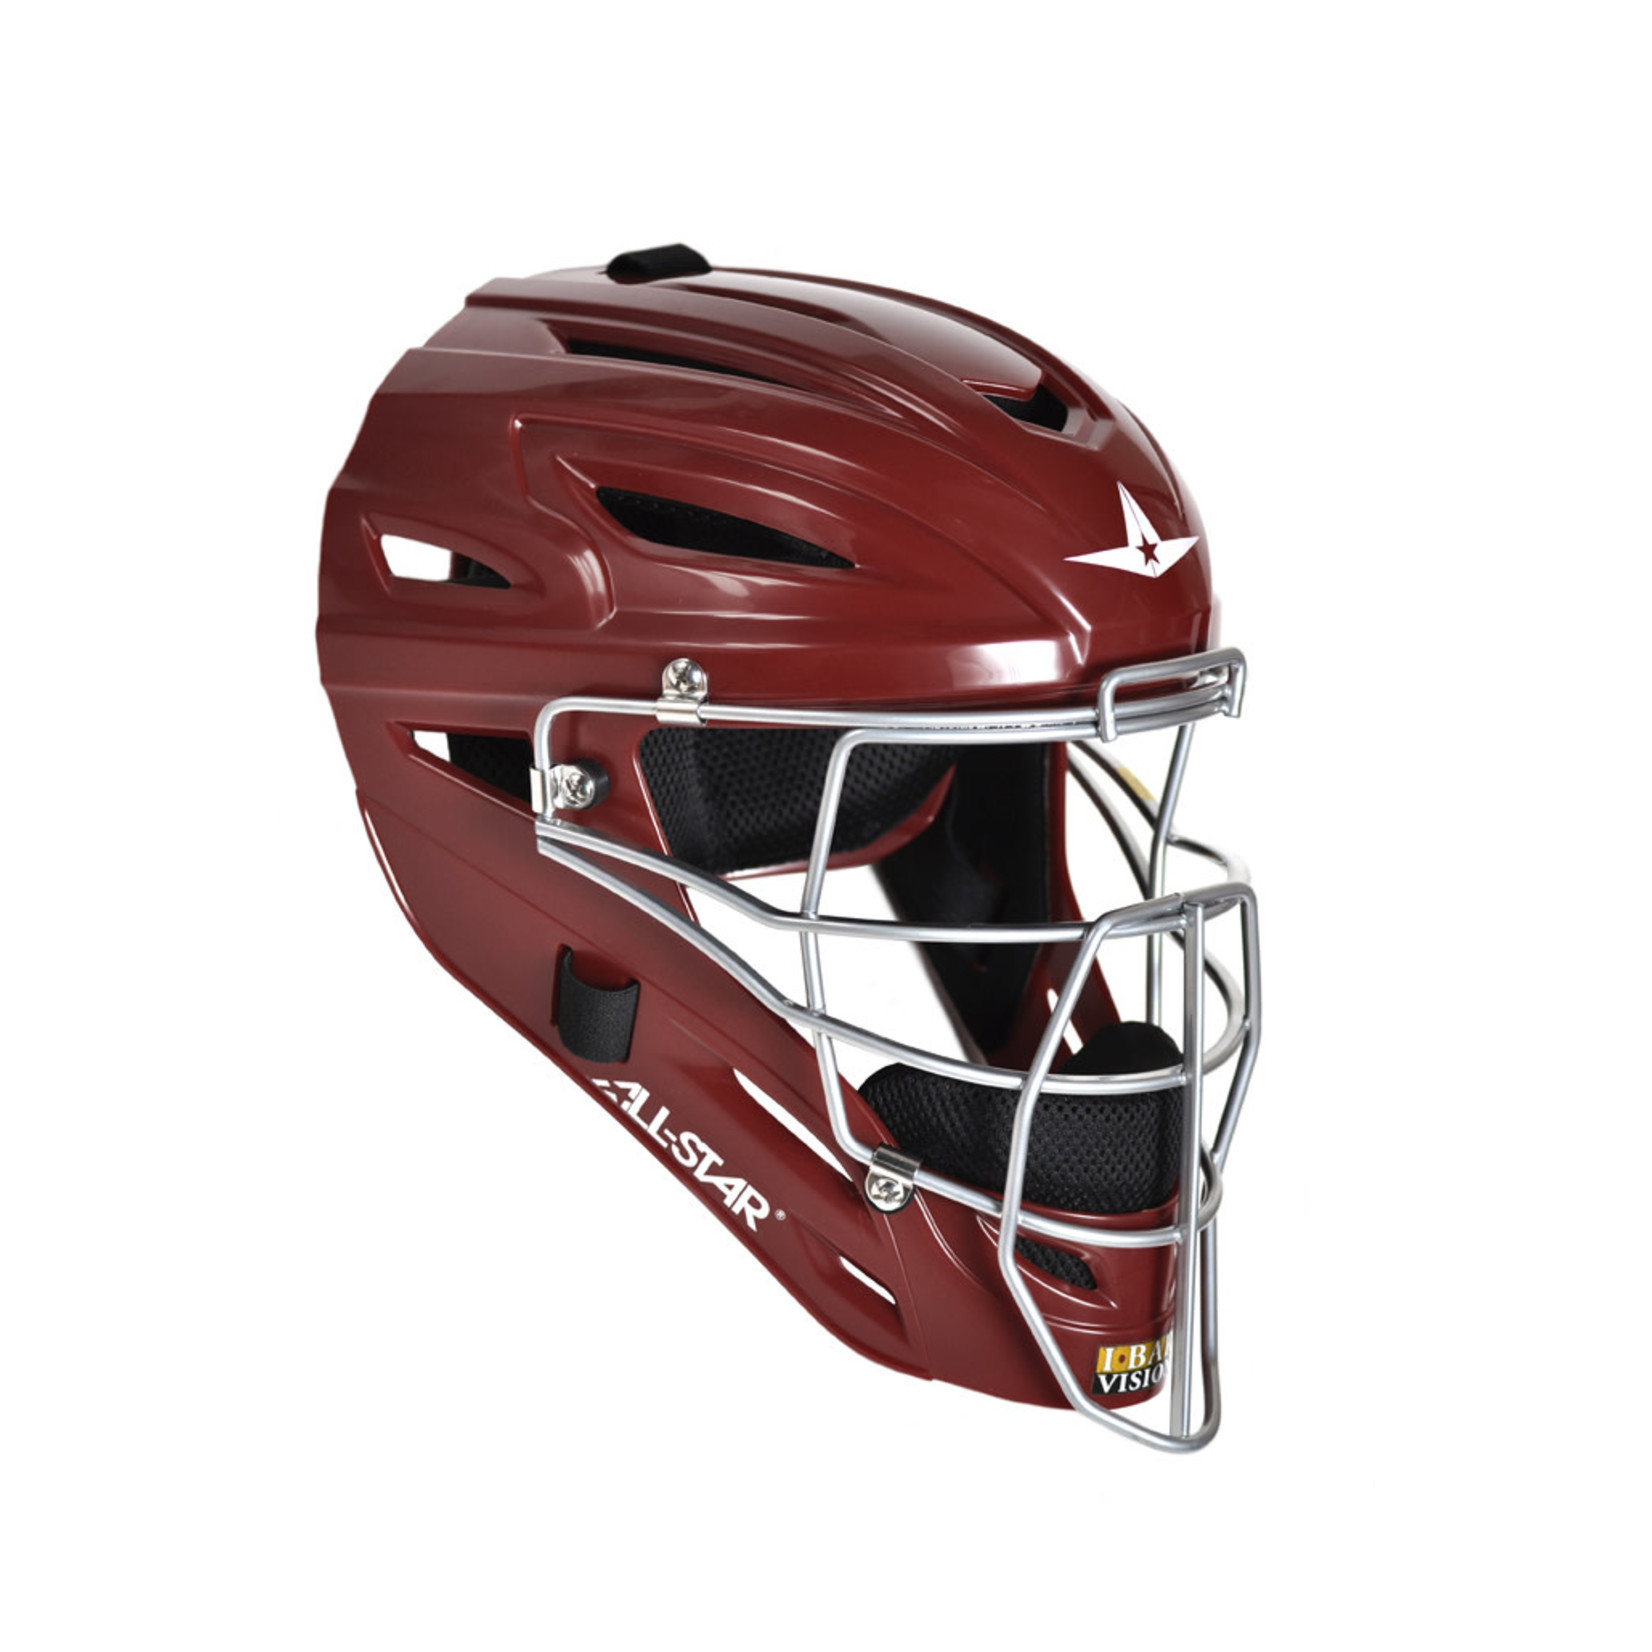 All-Star All Star MVP2500 Solid Molded Adult Helmet